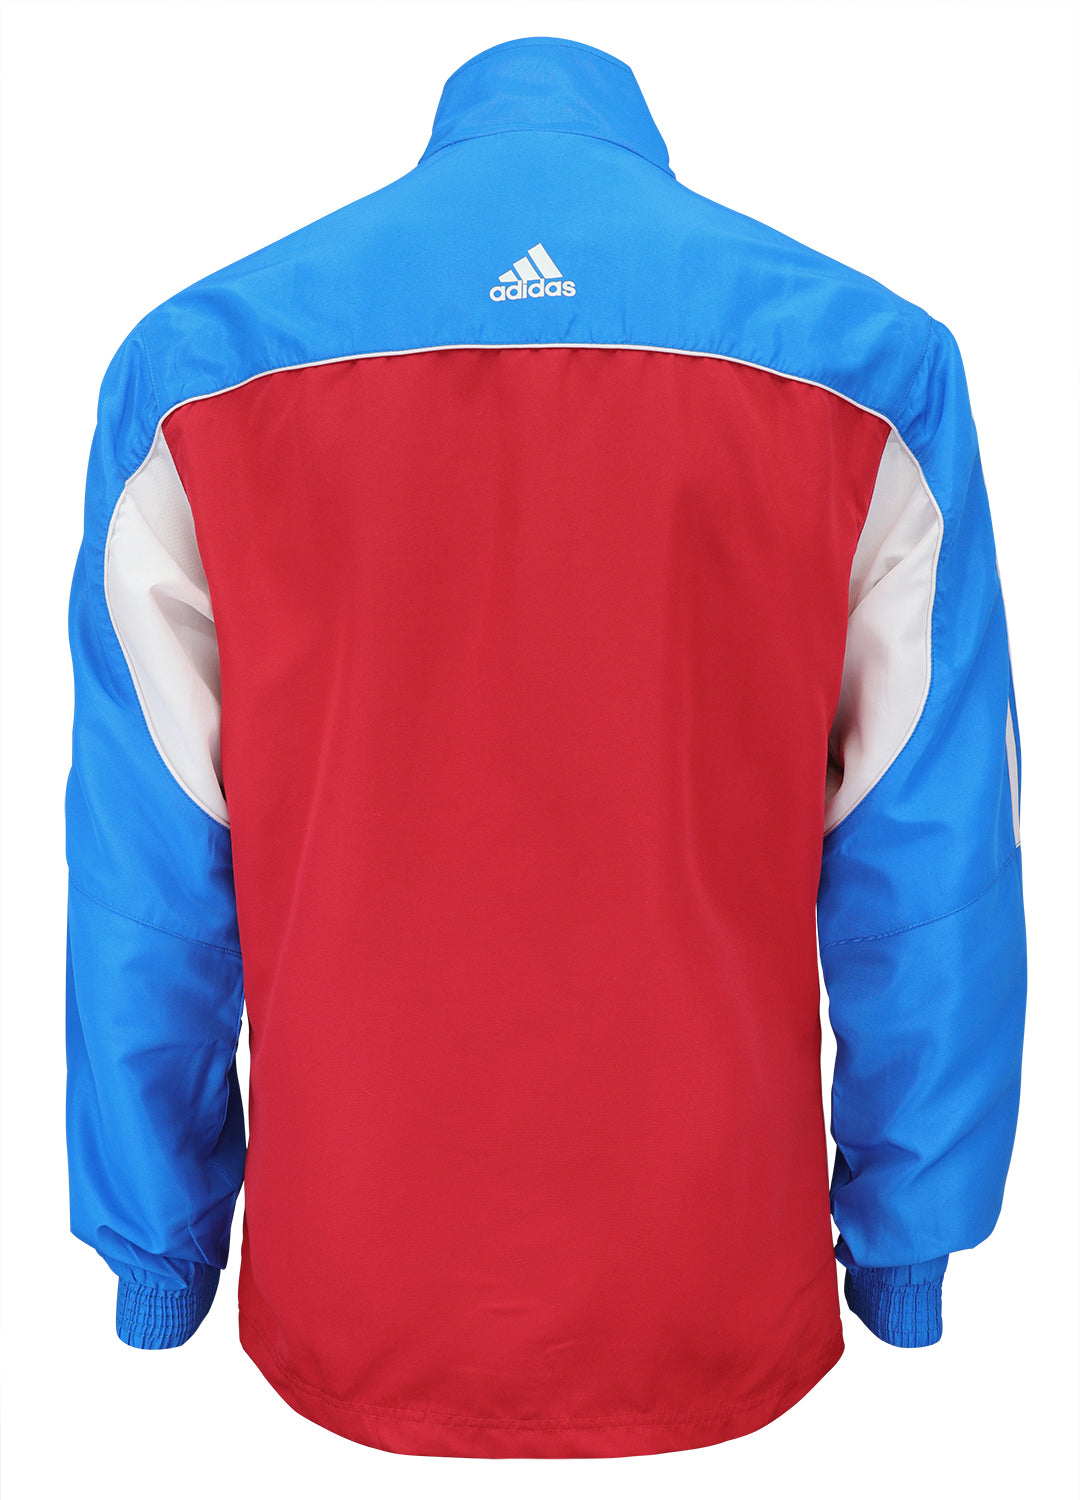 adidas red white blue jacket